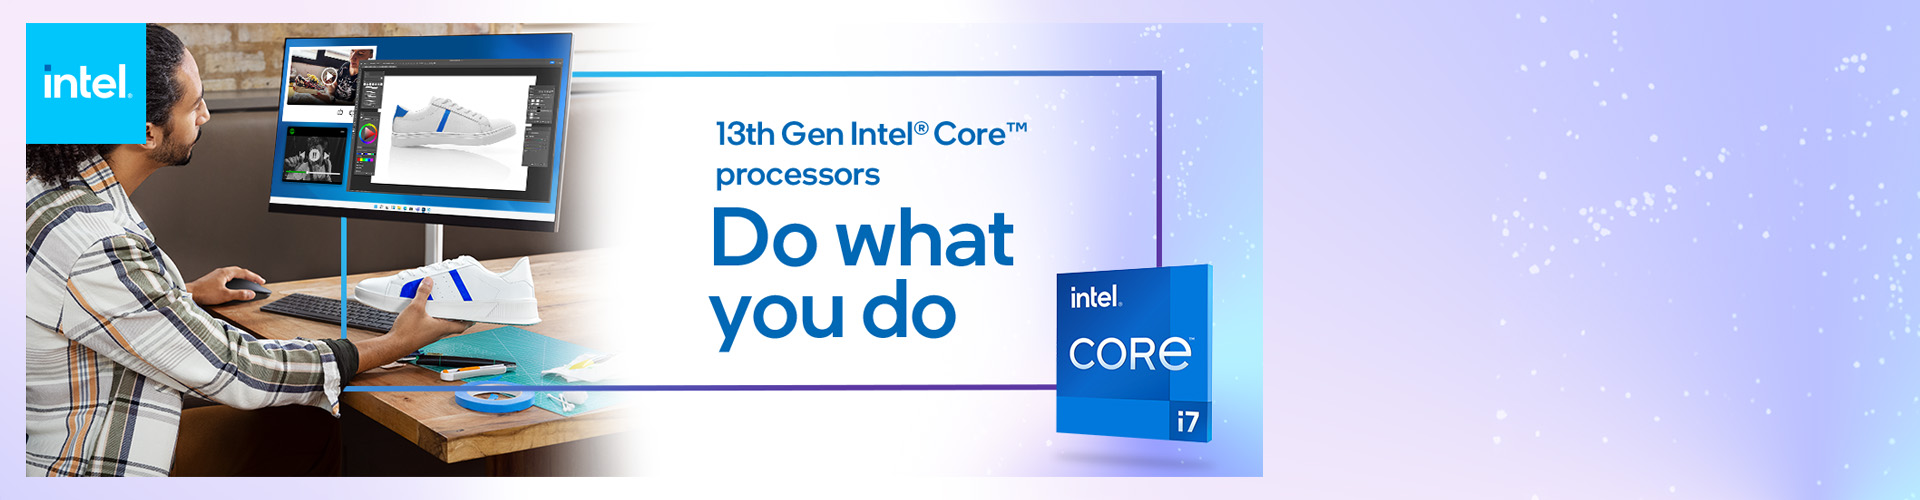 Intel 13th gen